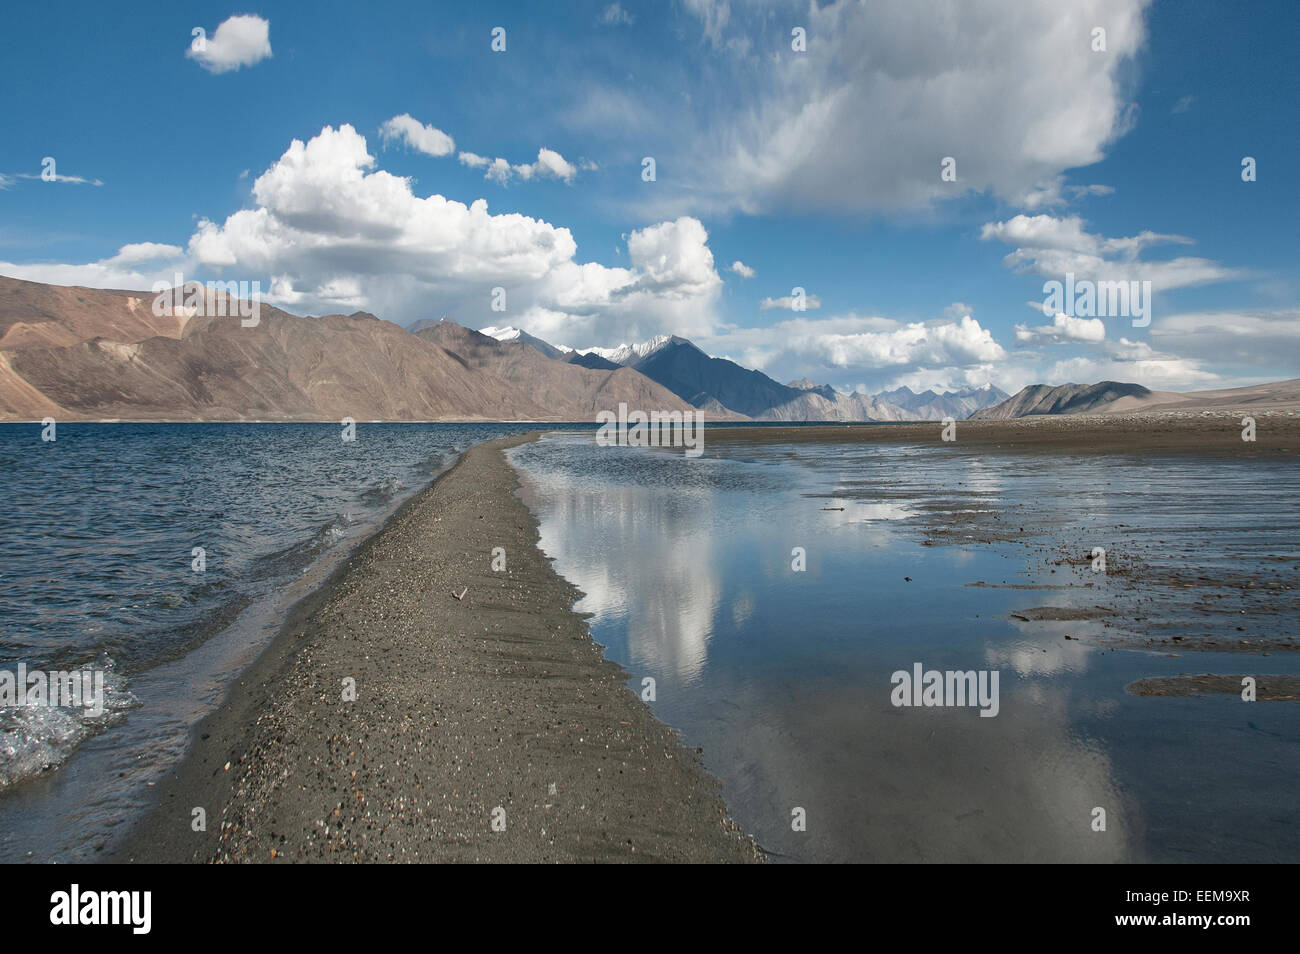 Himalayas, Tibet, Ladakh, Landscape with lake and mountain range Stock Photo